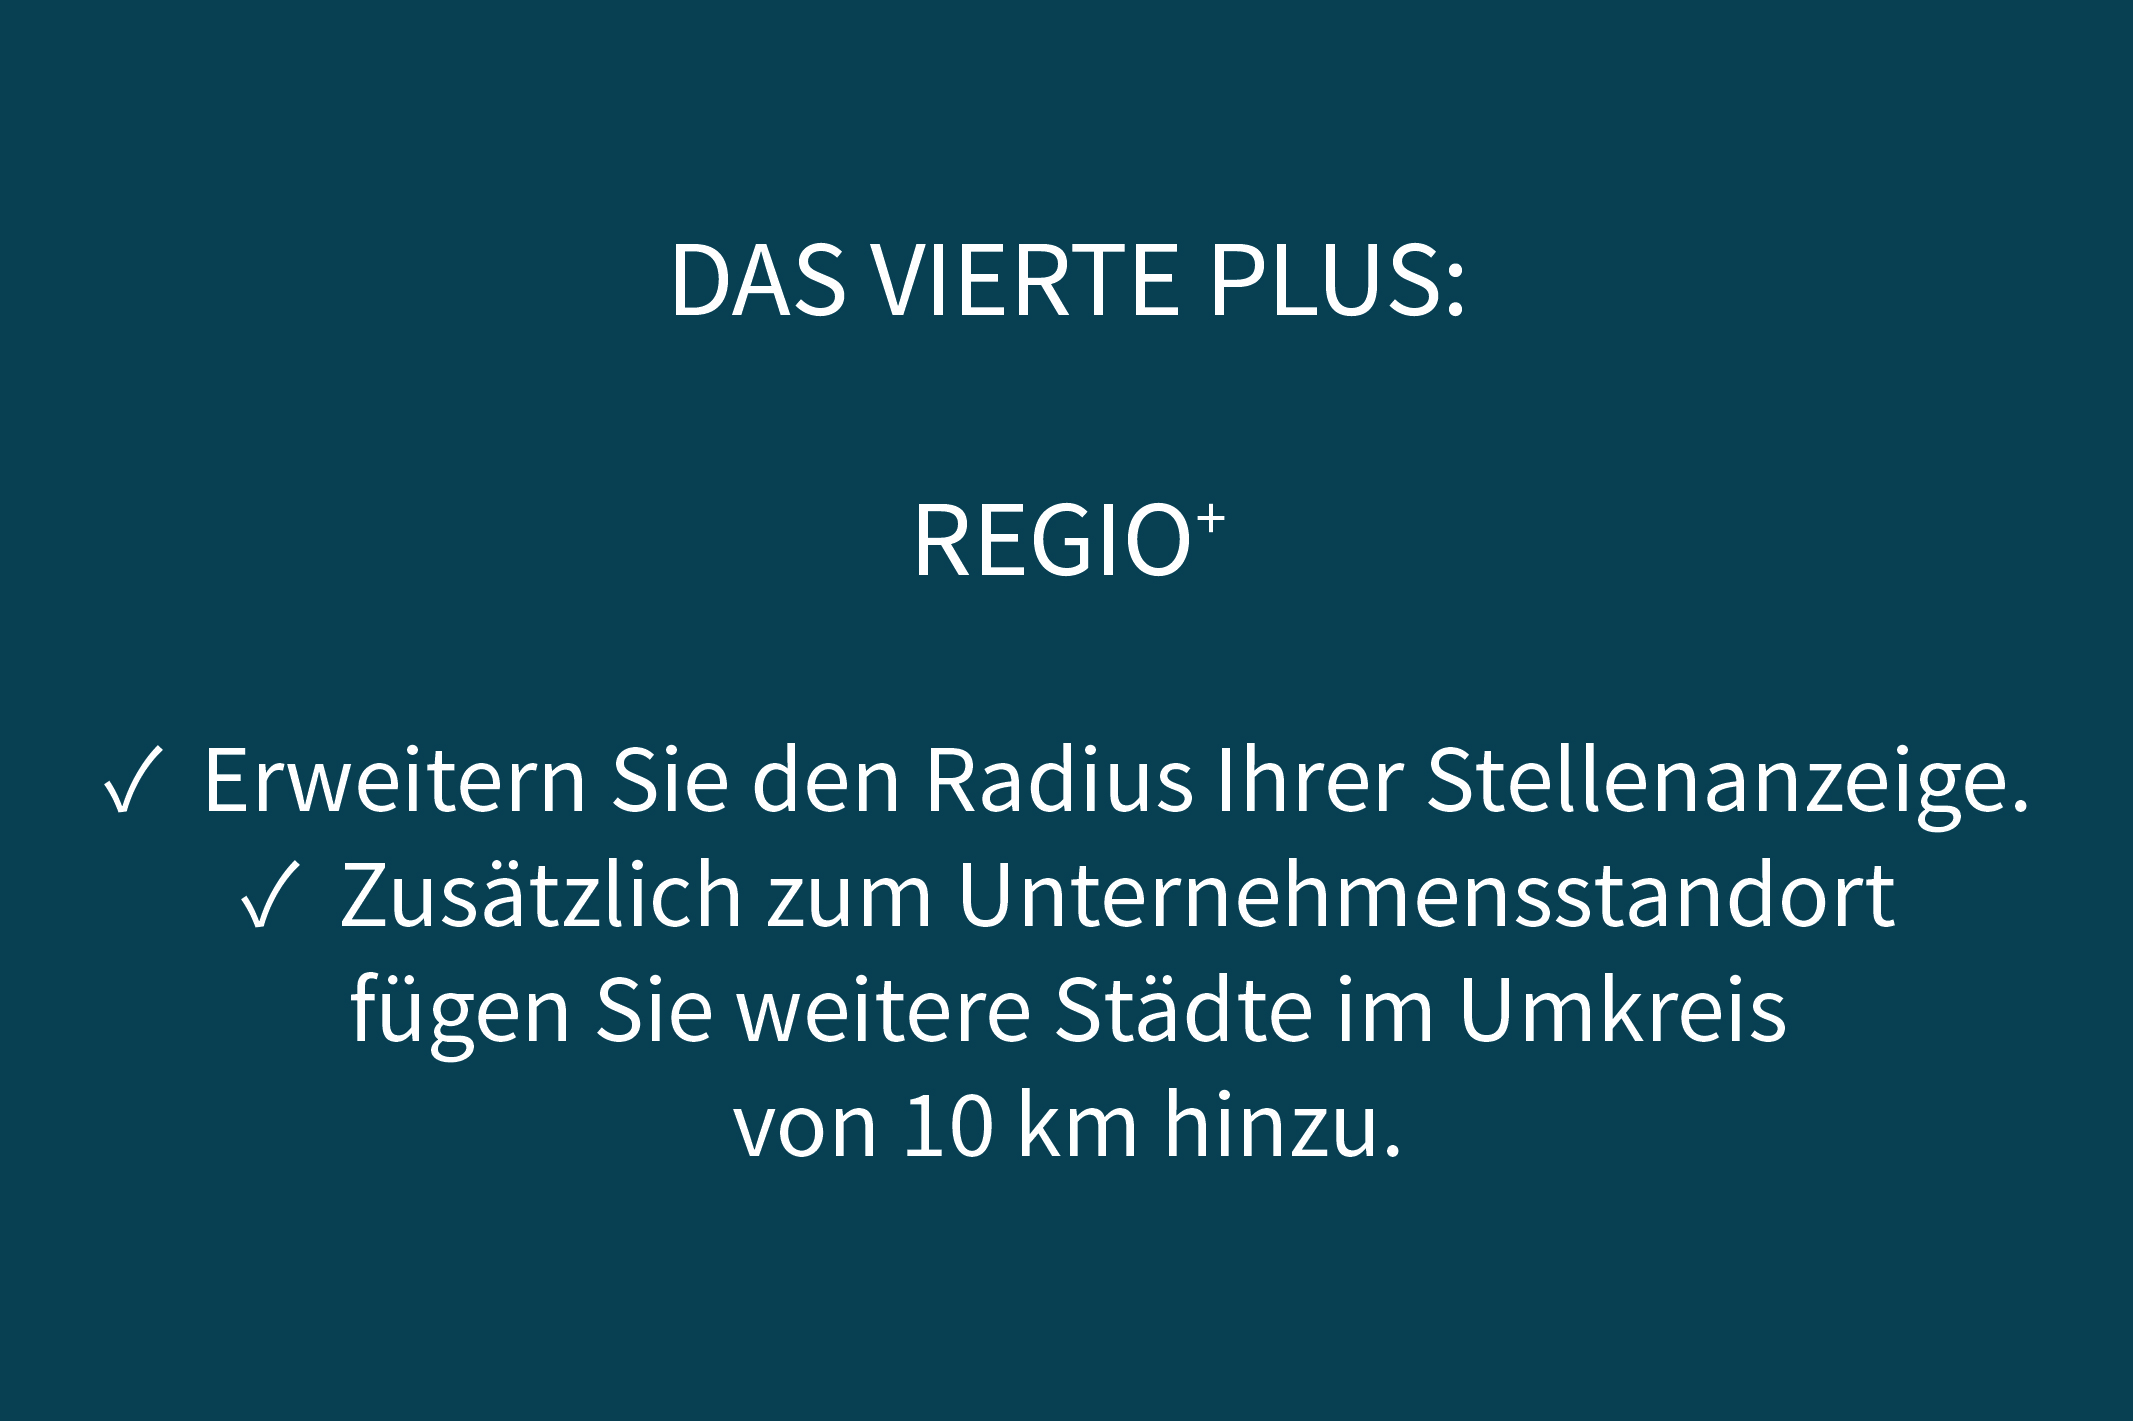 RegioPlus - Laufzeit 30 Tage